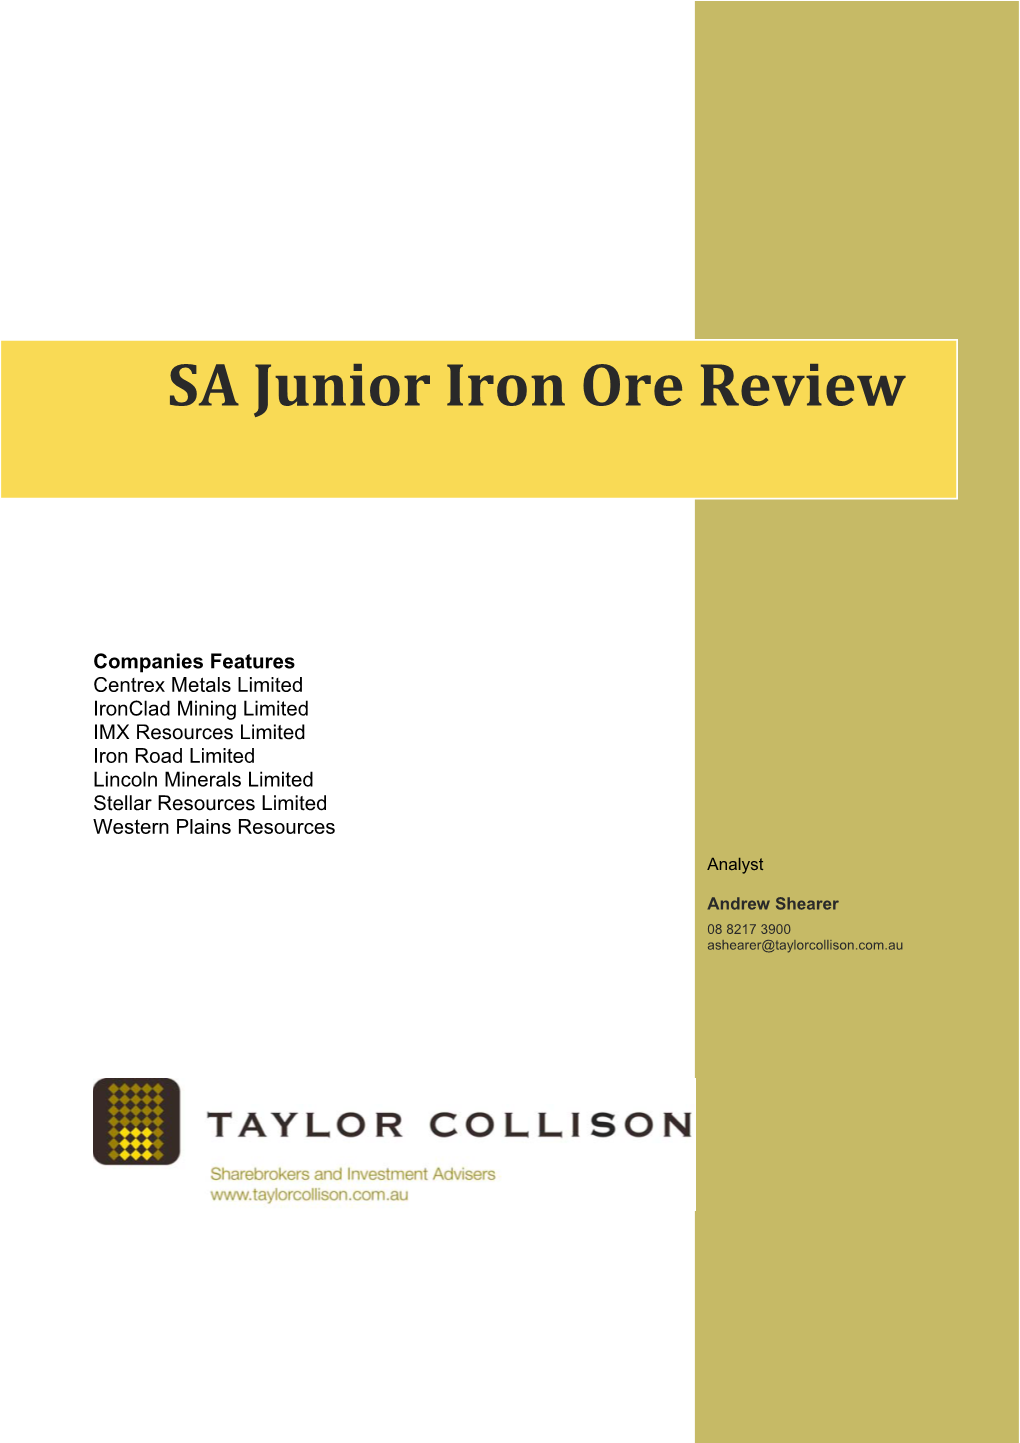 SA Junior Iron Ore Review